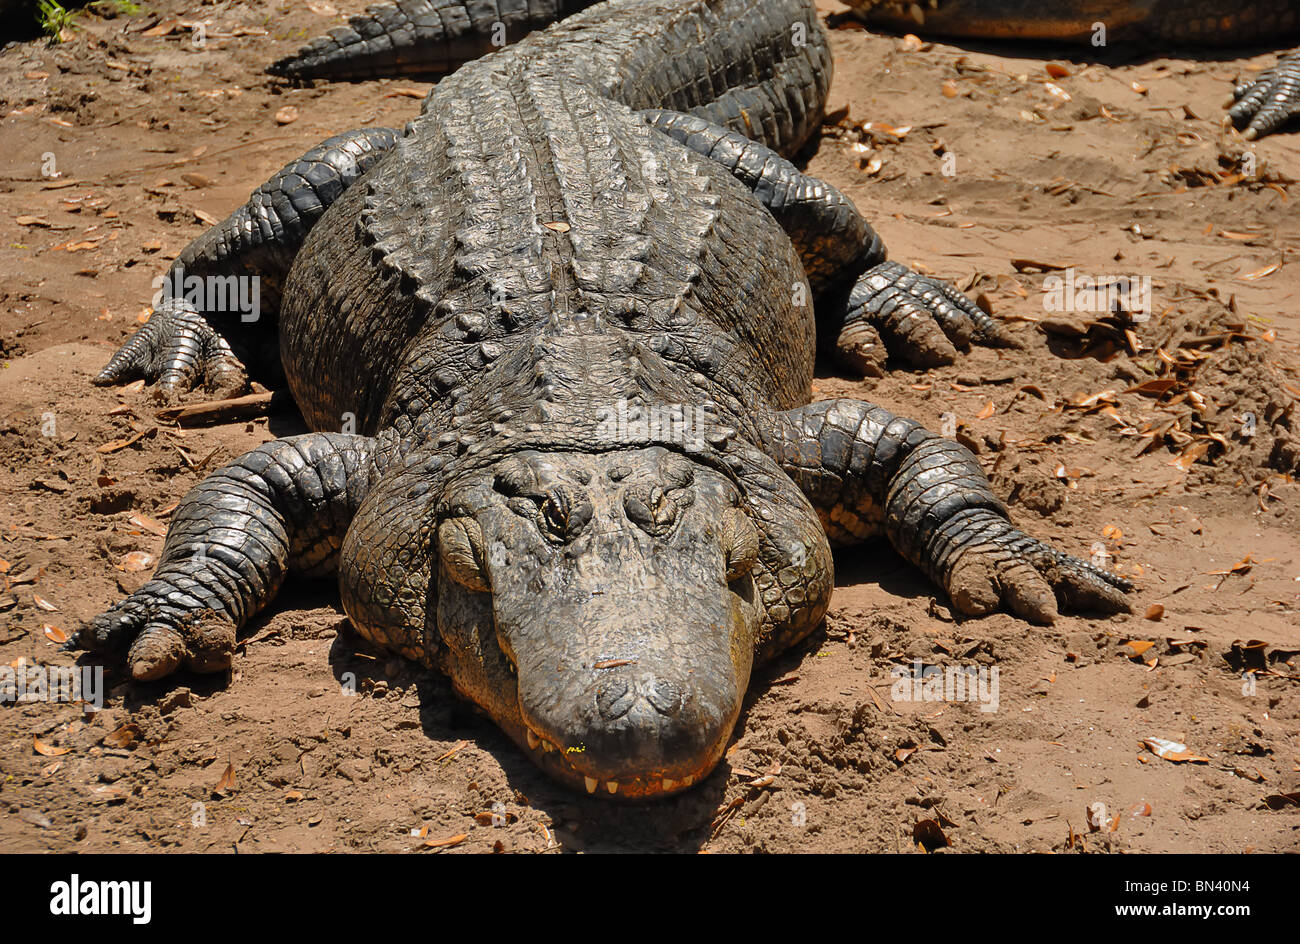 American alligators (Alligator mississippiensis) inhabit the southeastern United States. Stock Photo